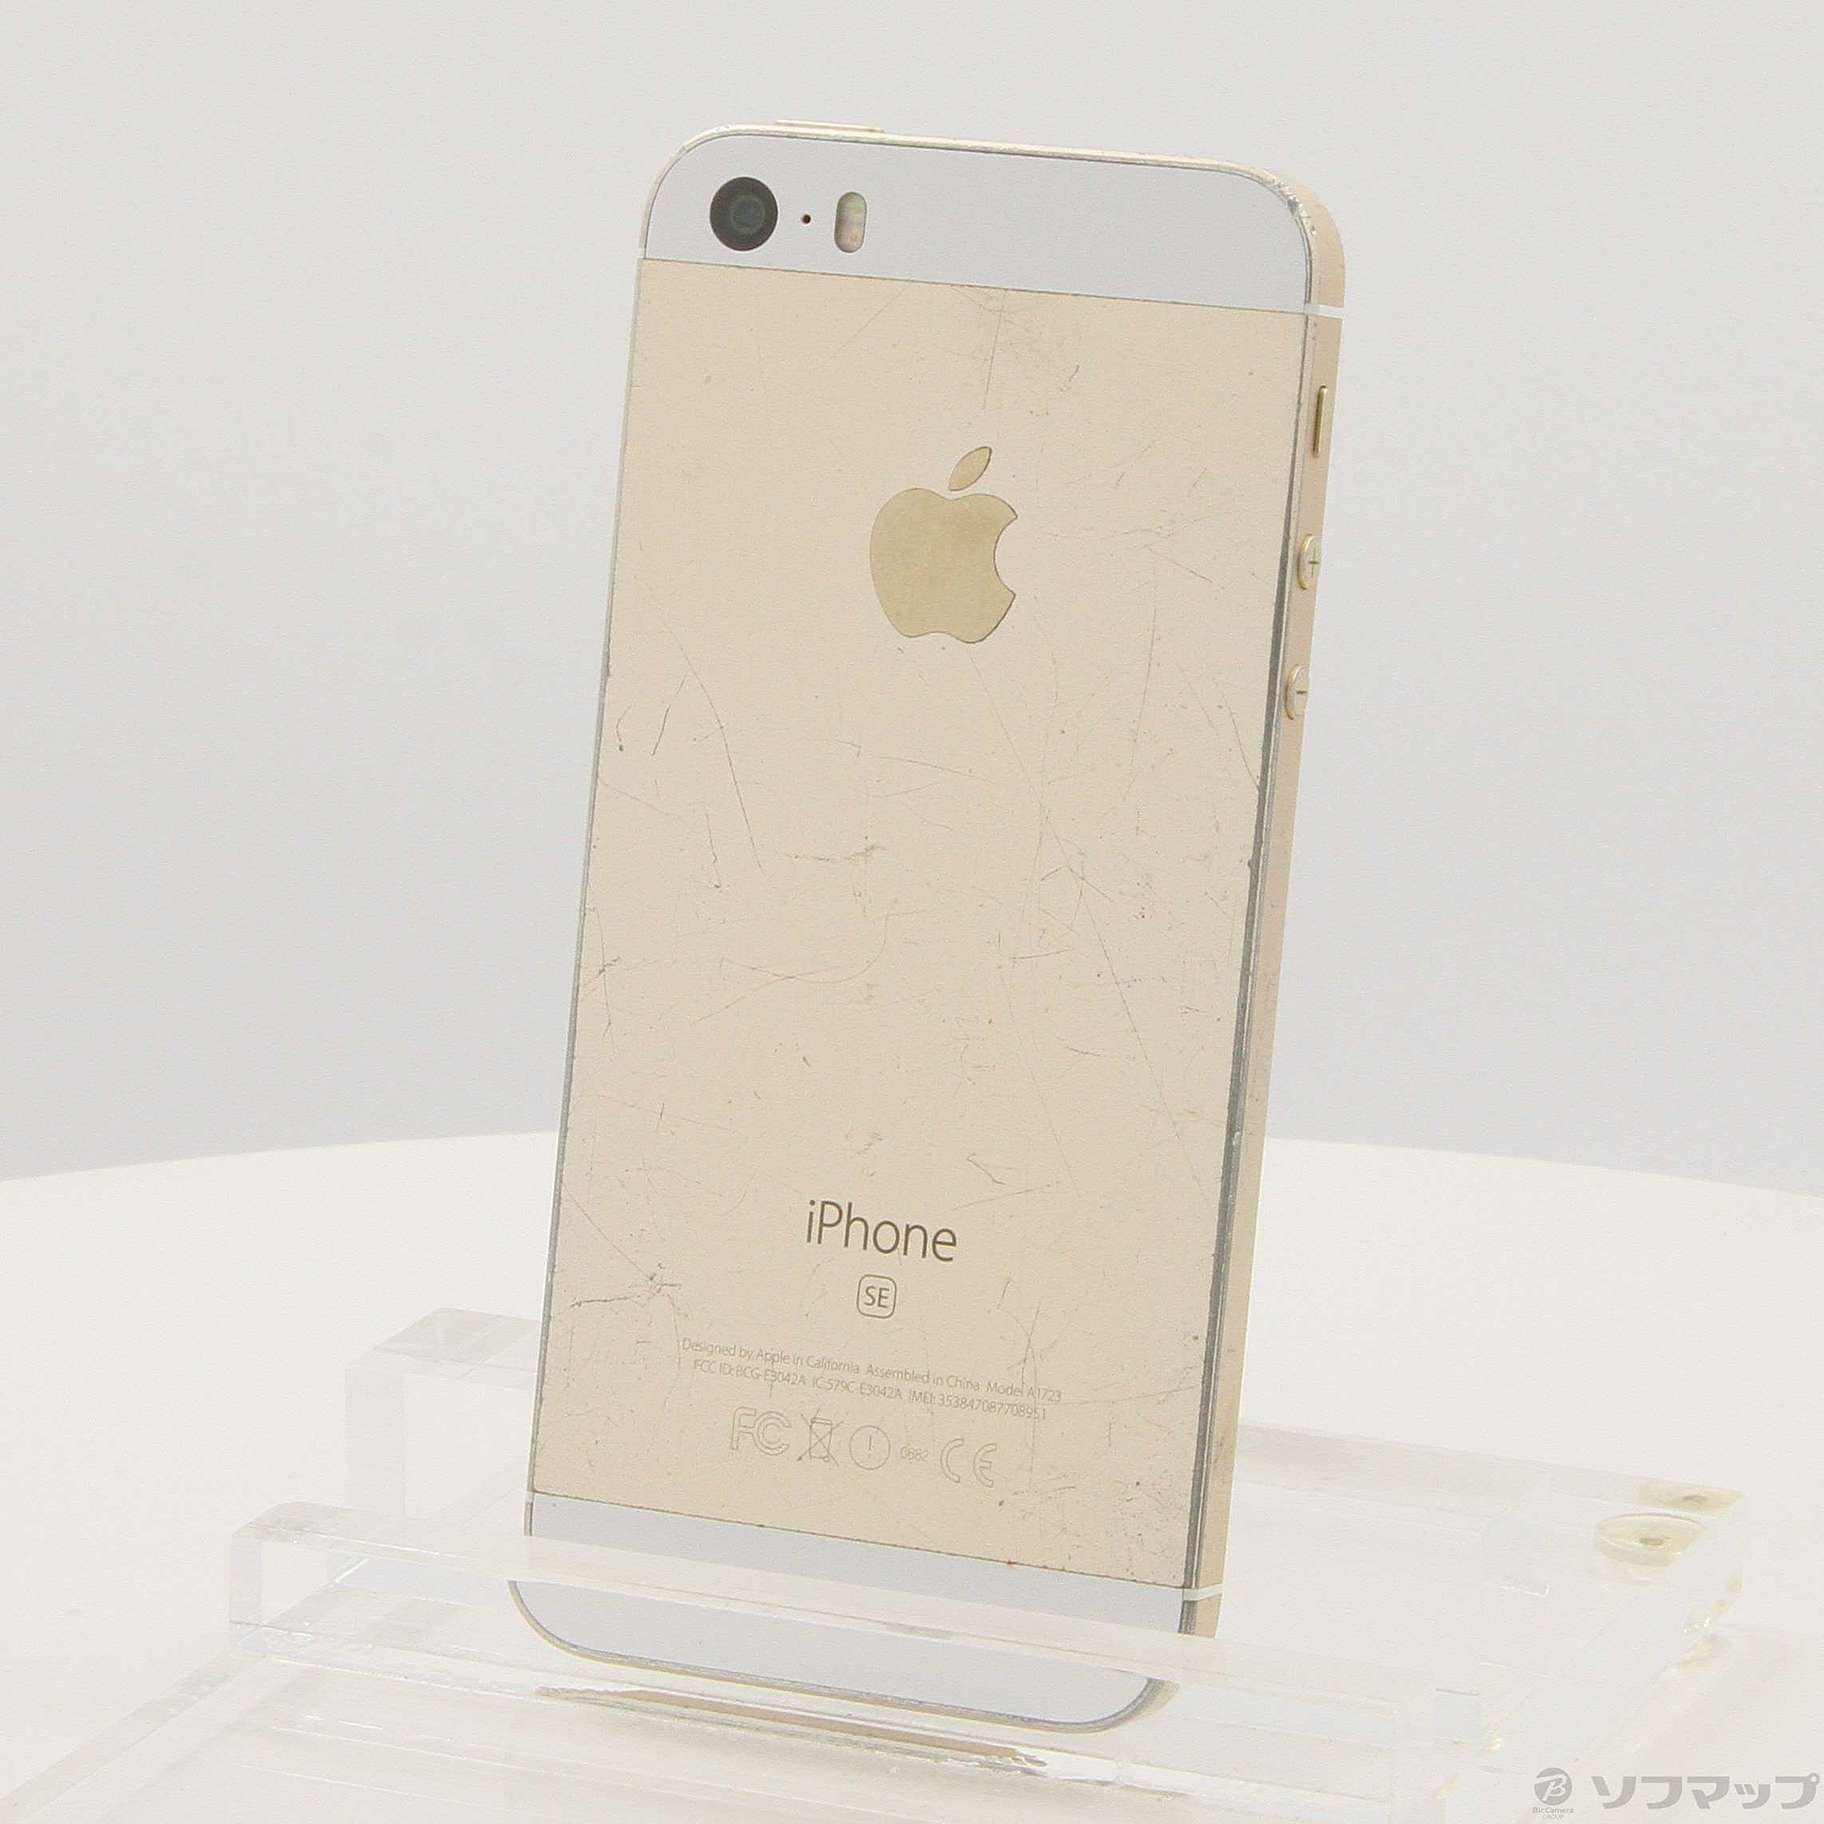 iPhone SE Gold 32 GB Softbank